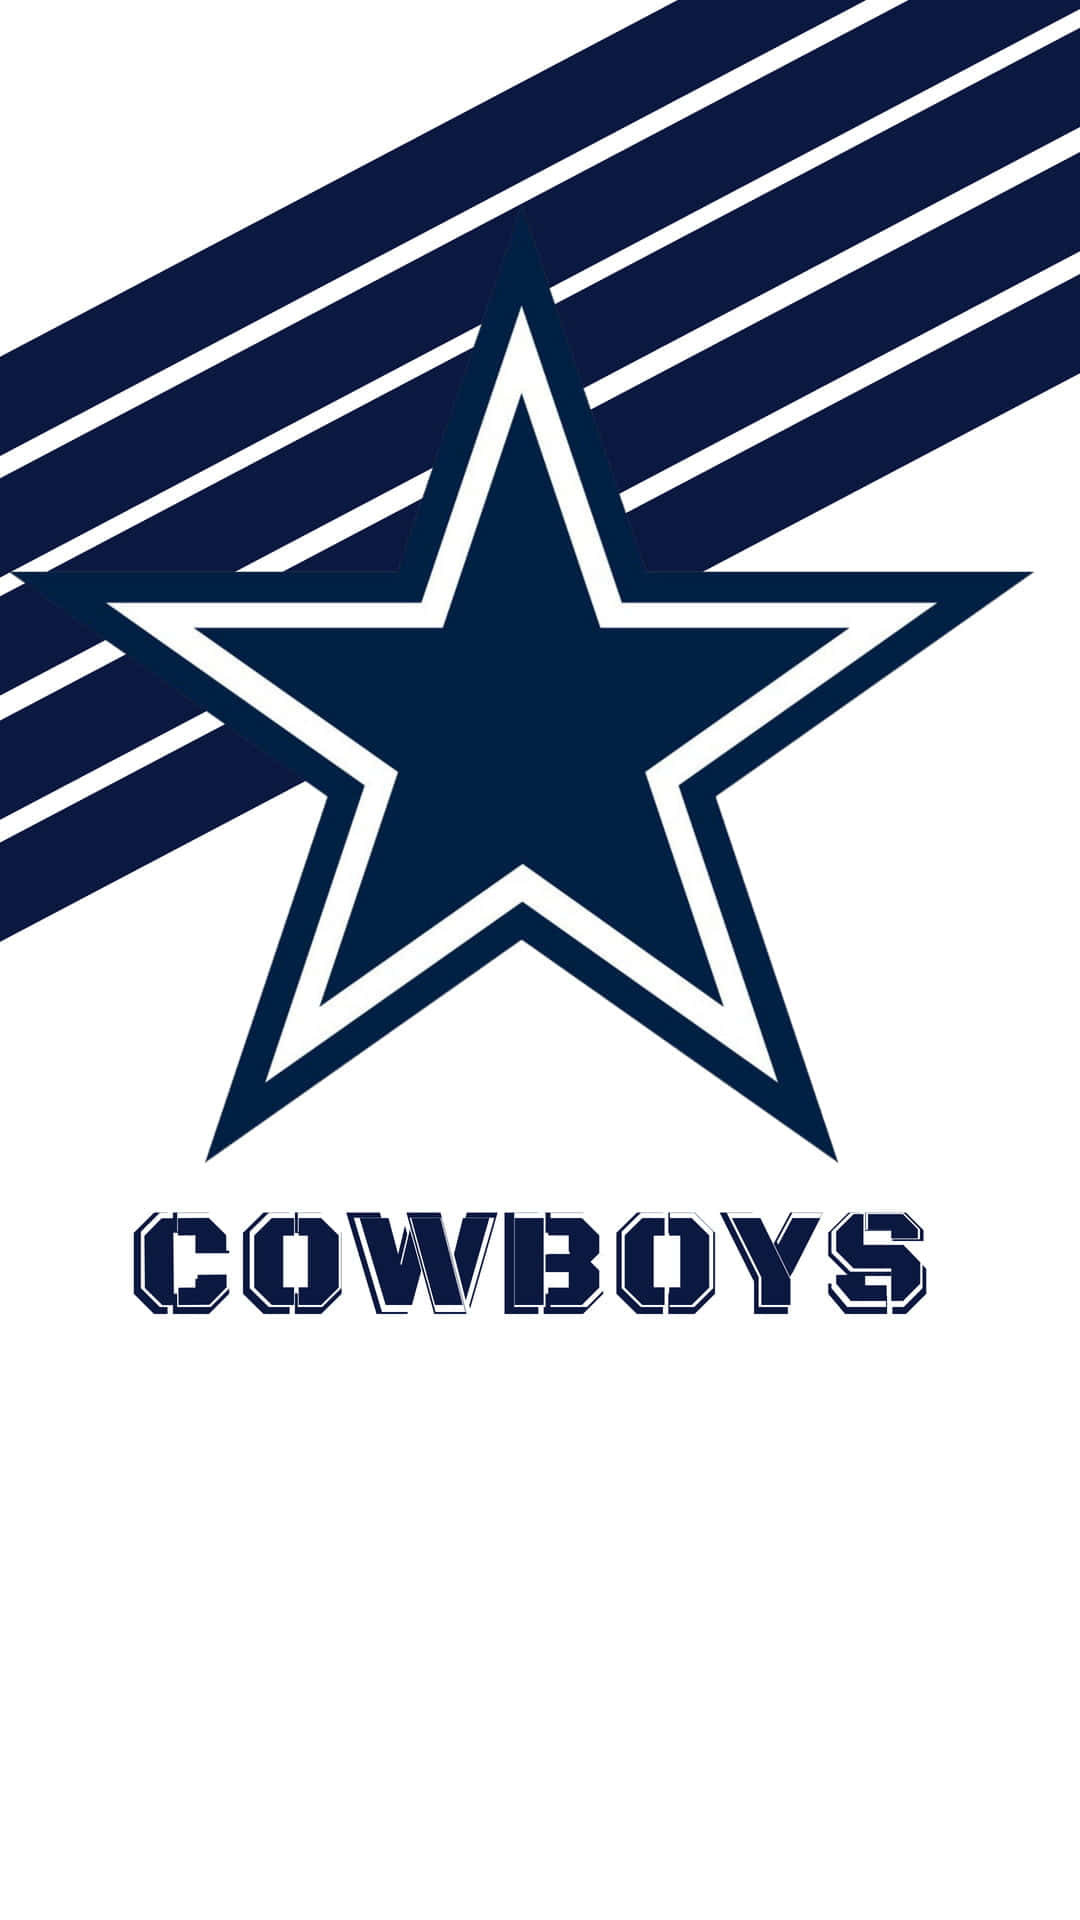 Dallascowboys-logo På En Hvid Baggrund.